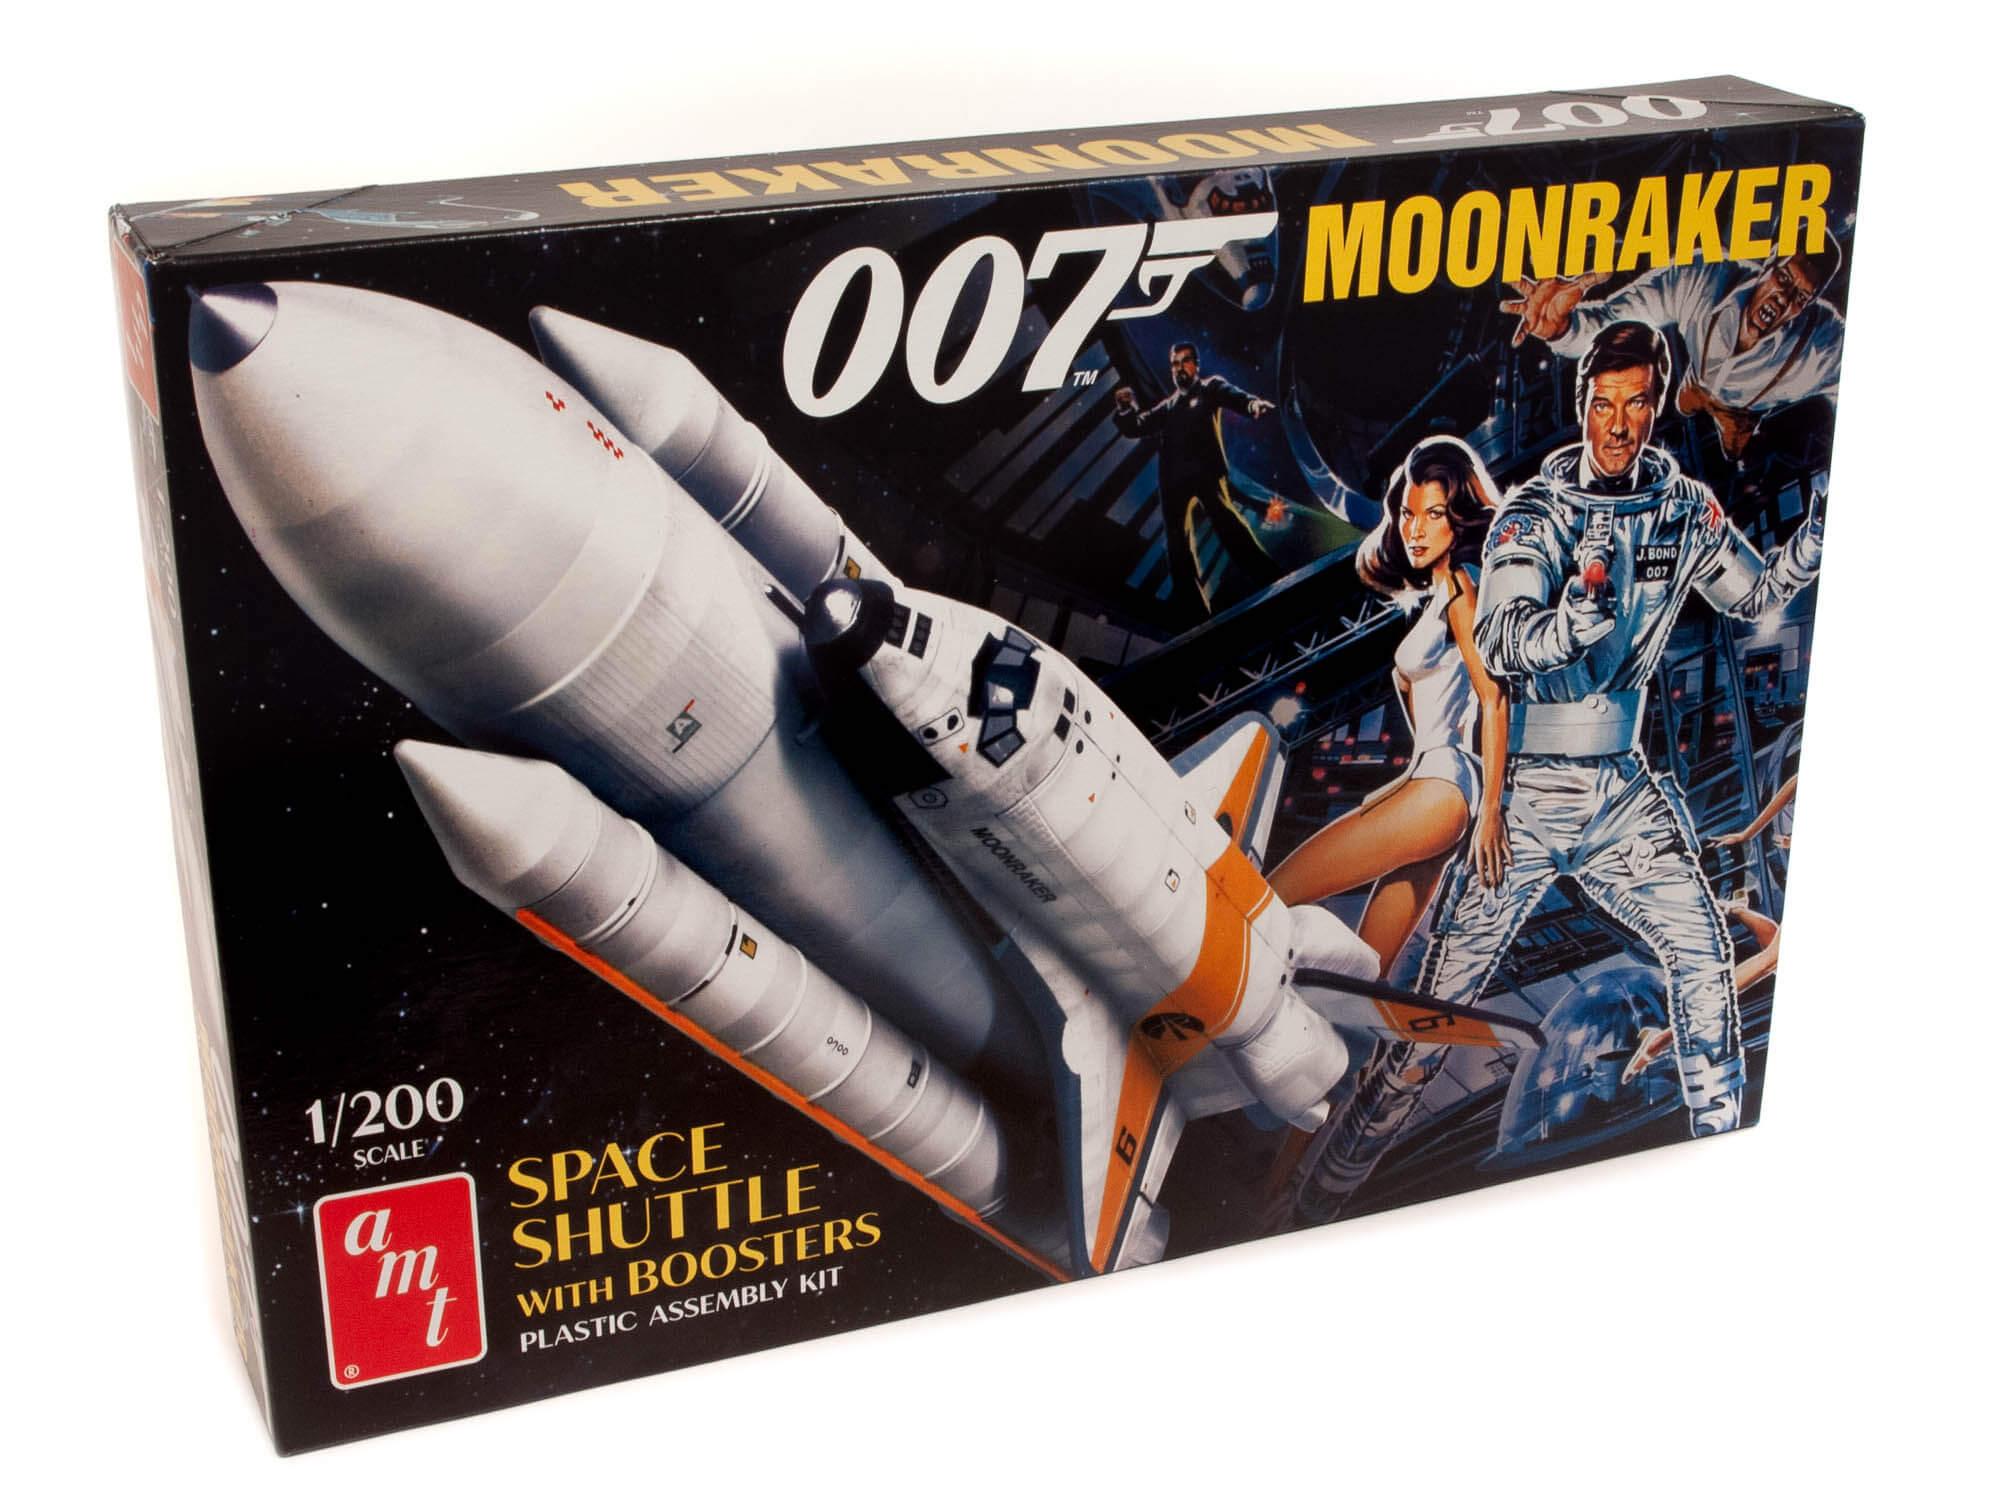 1/200 Moonraker Shuttle w/Boosters - James Bond